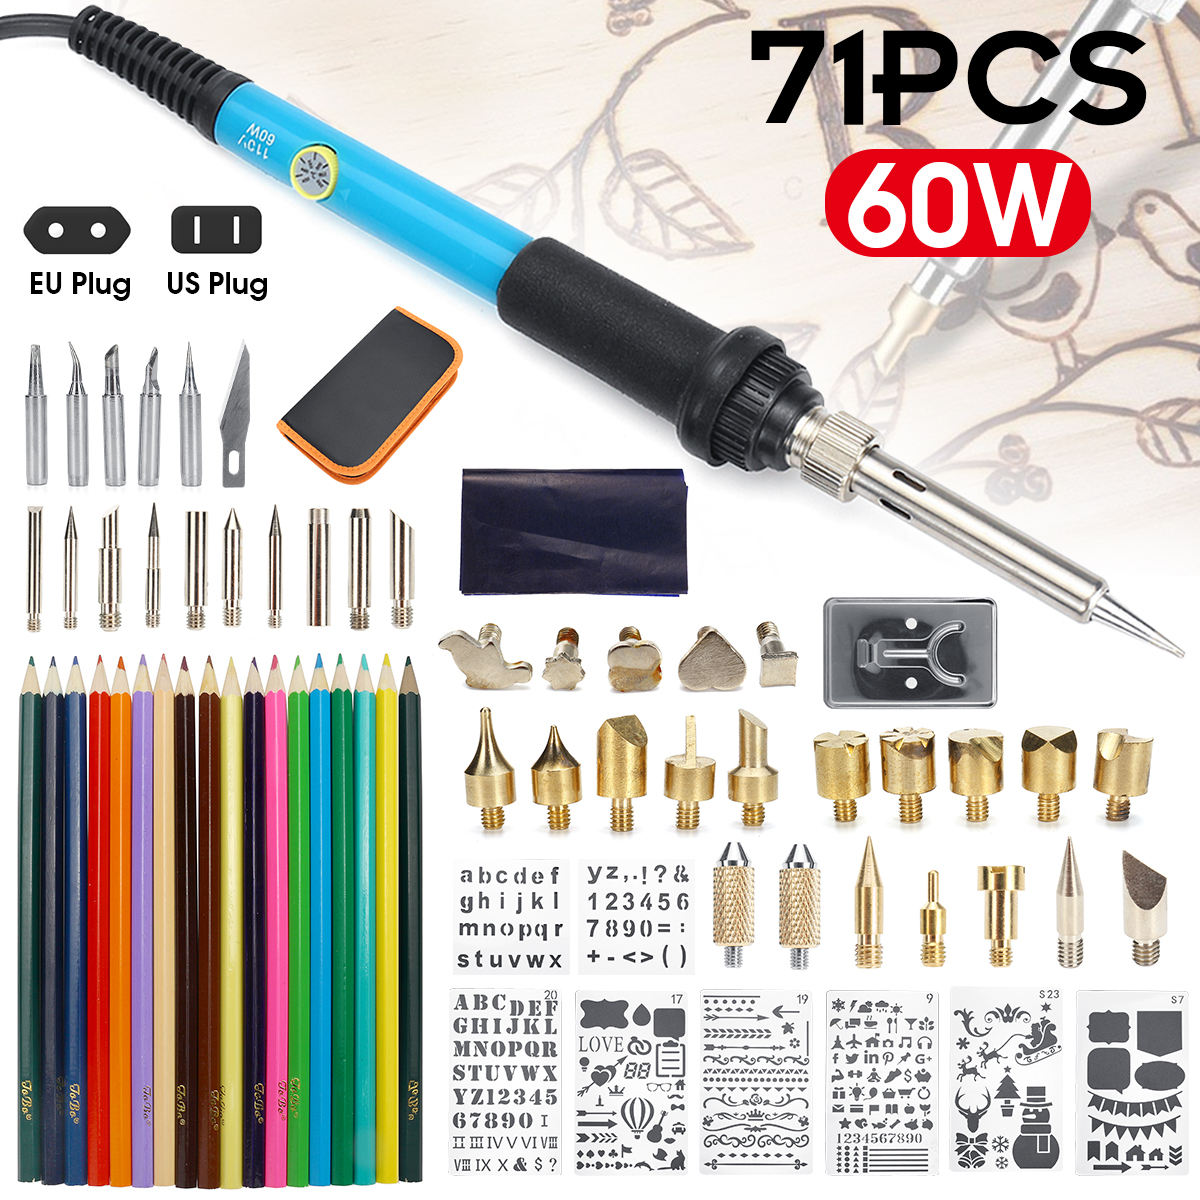 71Pcs-60W-Pen-Pyrography-Solder-Iron-Tool-Kit-Set-Adjustable-Wood-Burning-Carving-Embossing-Tool-1417337-1